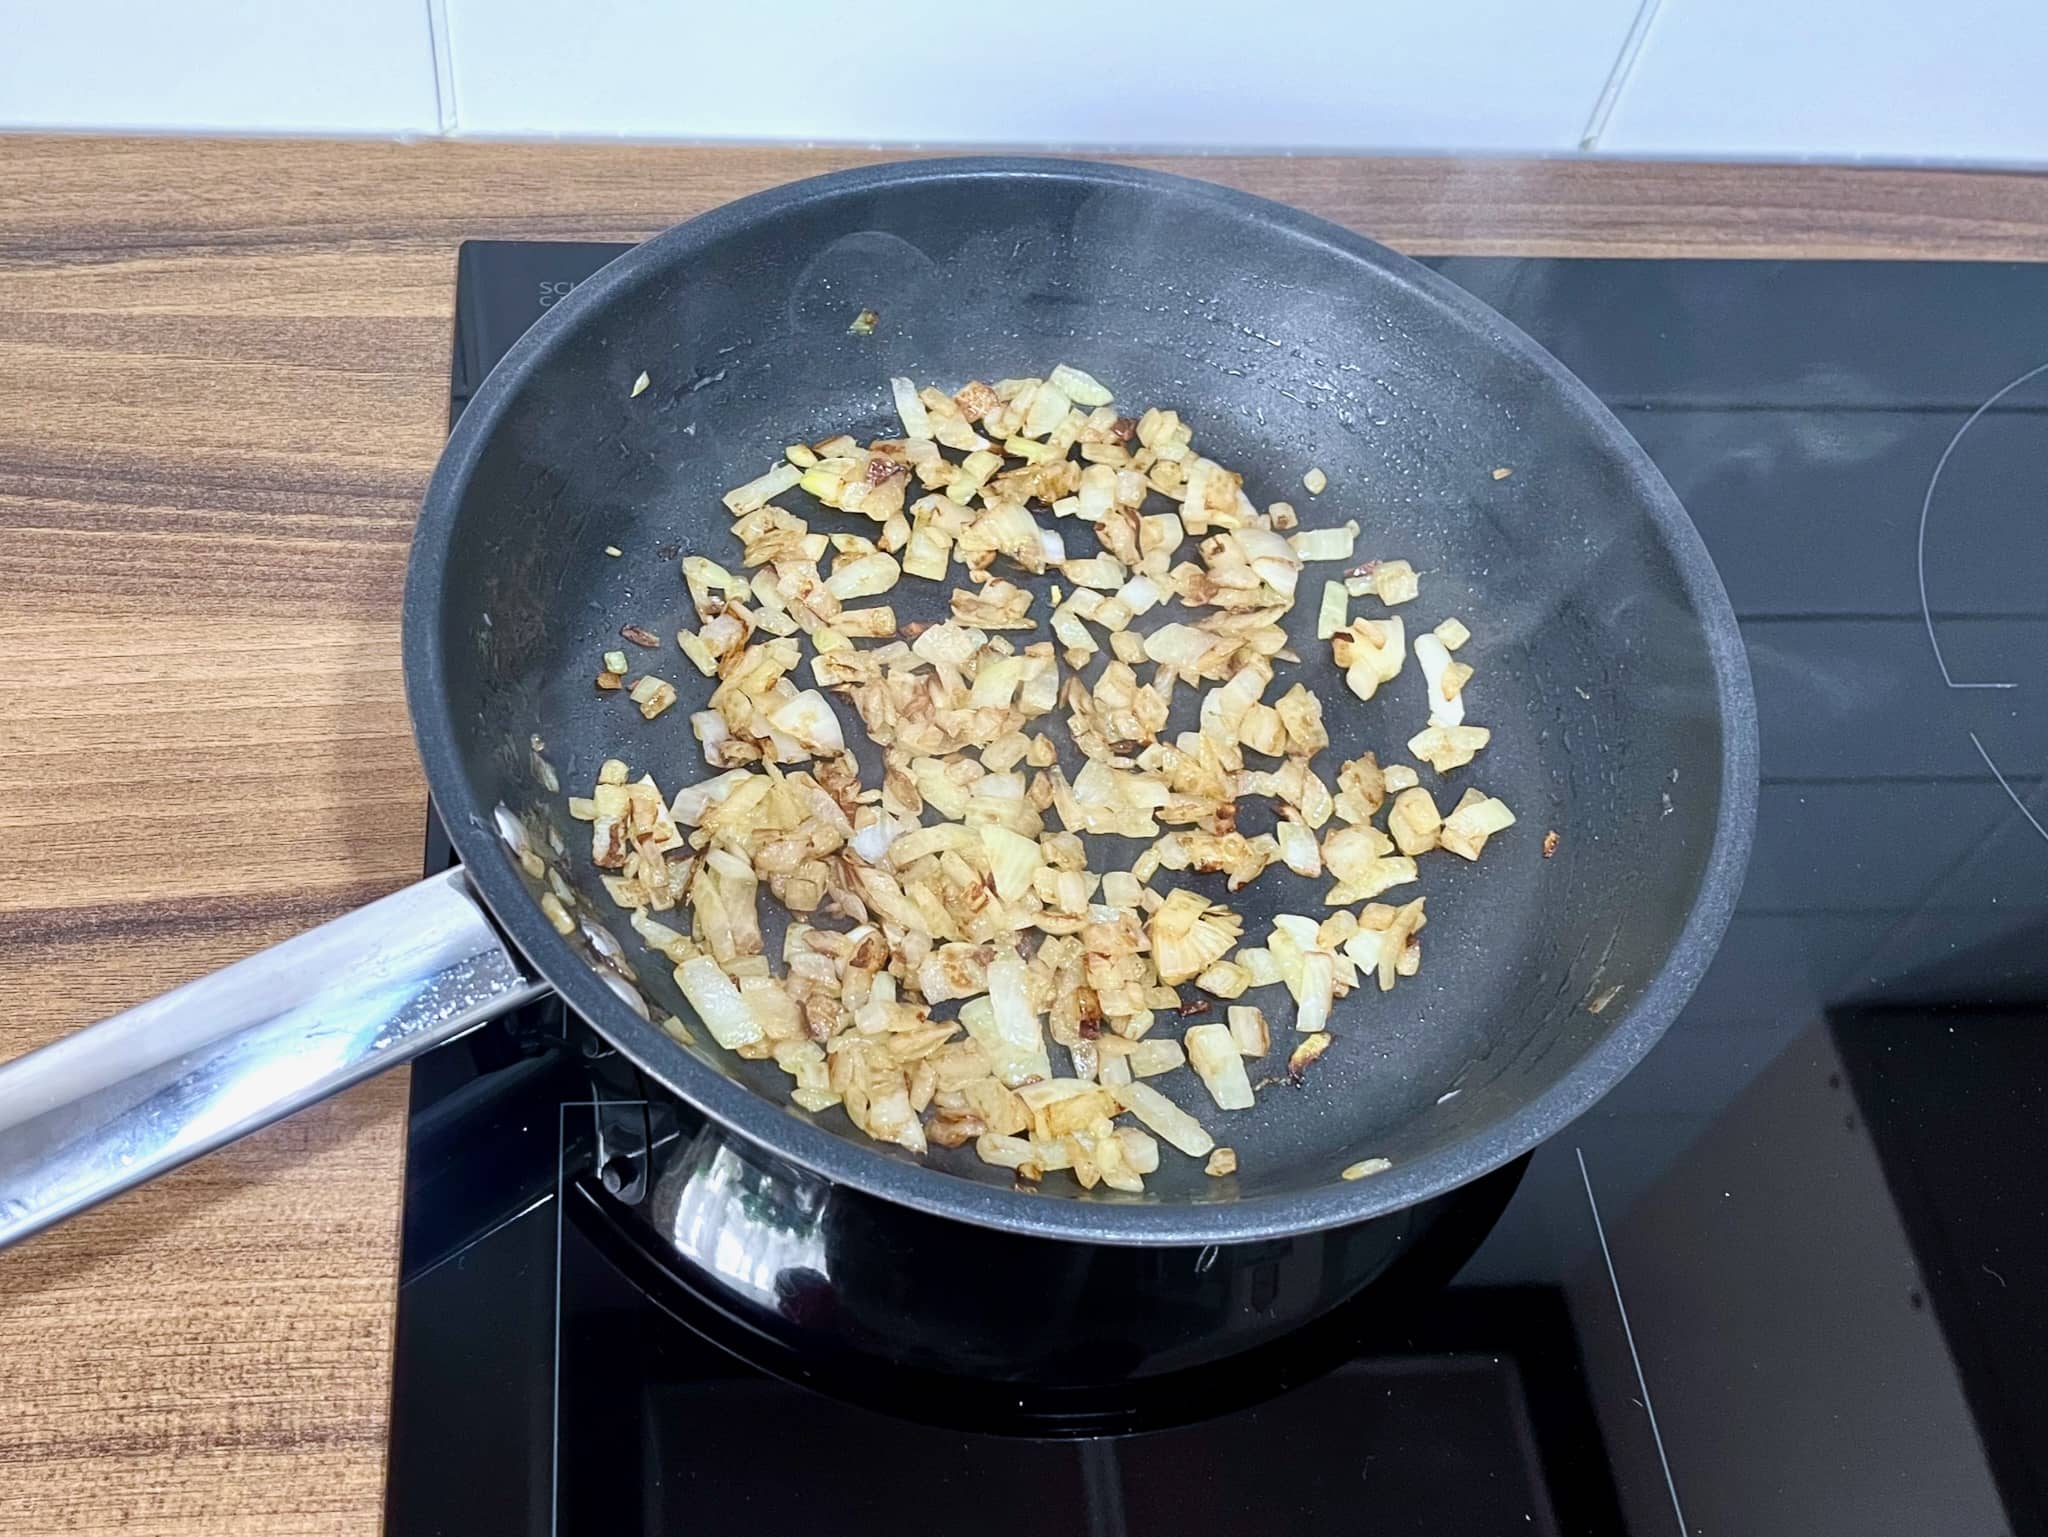 Fried onion in a pan